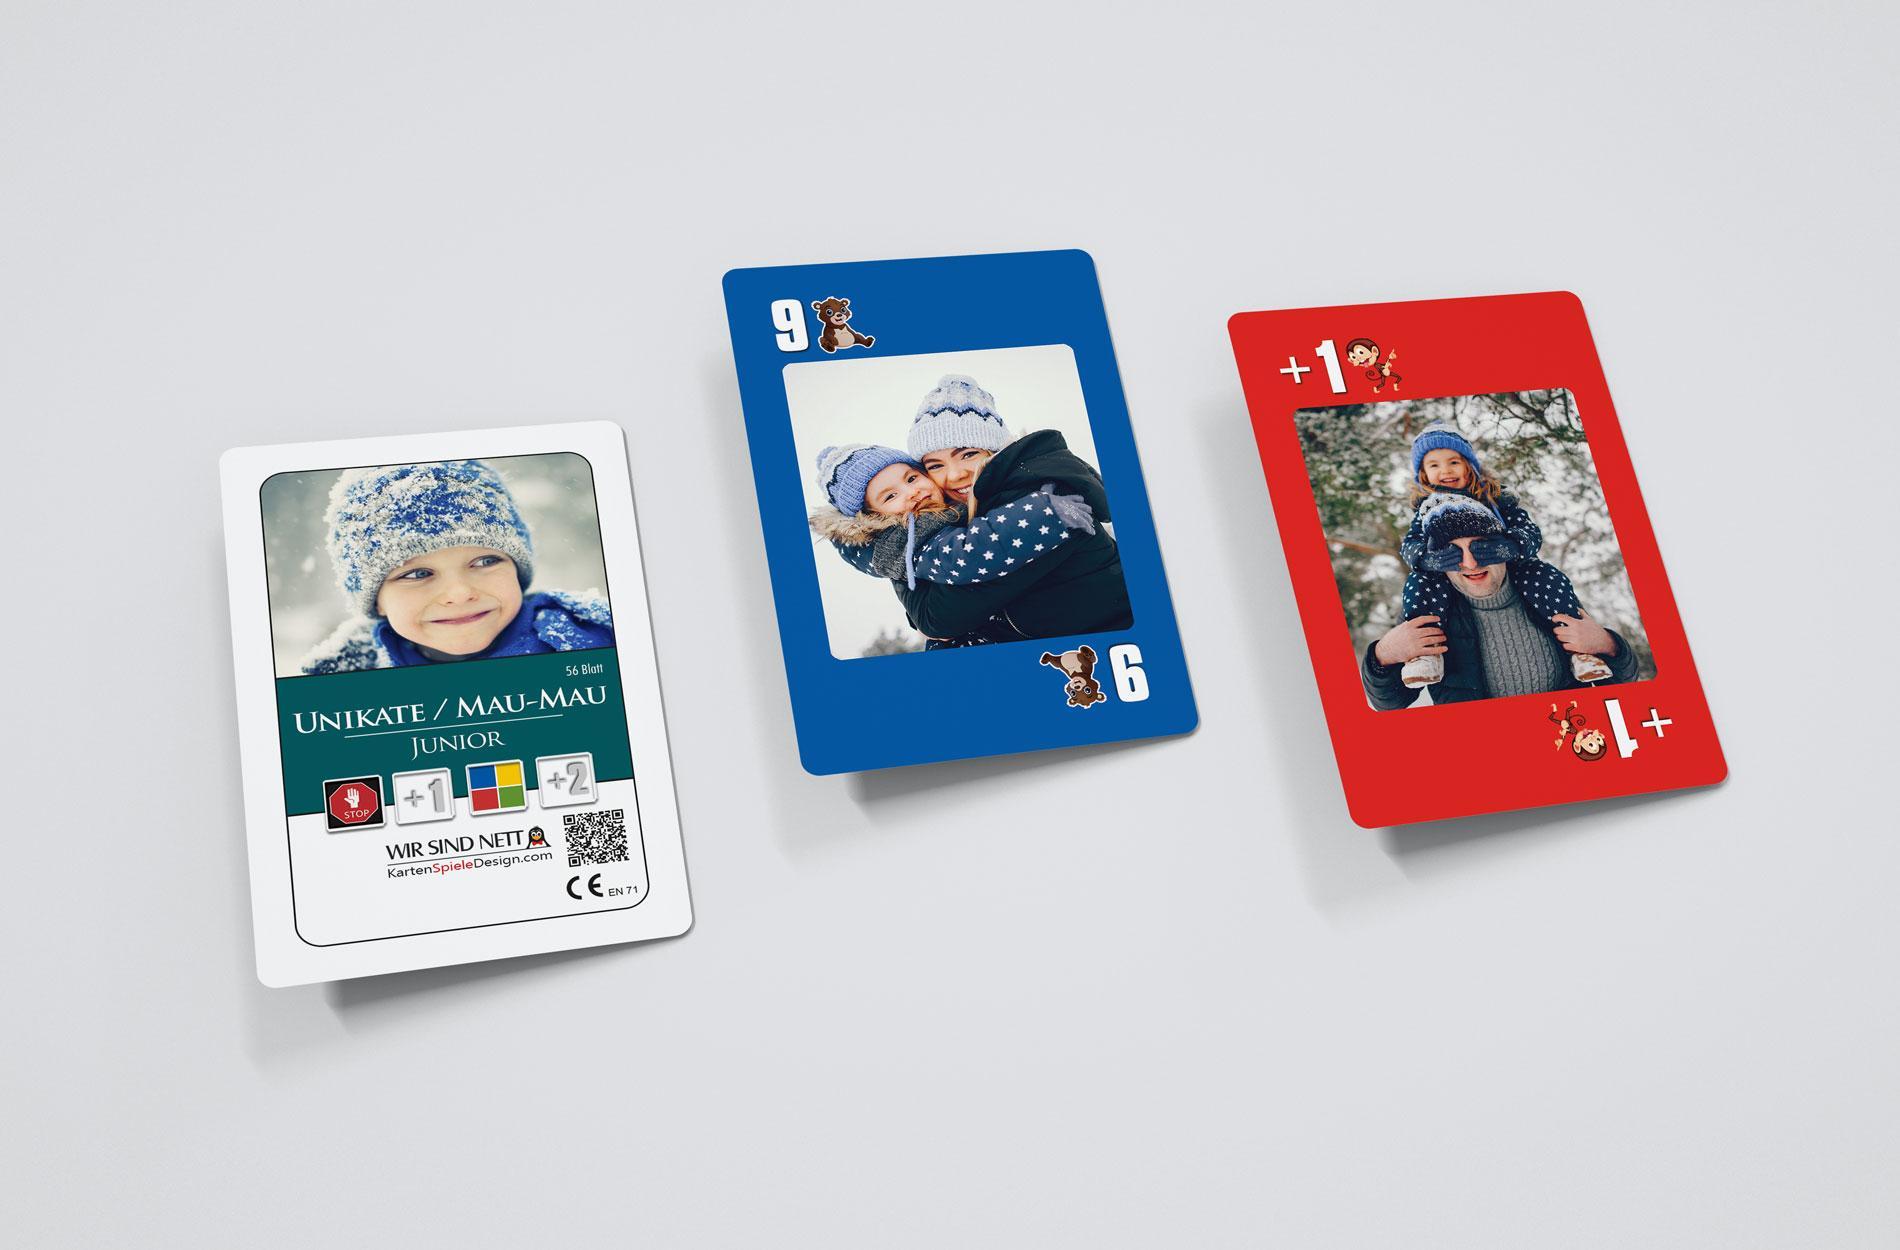 Unikate / Mau-Mau Junior-Edition - Spielkarten mit Fotos